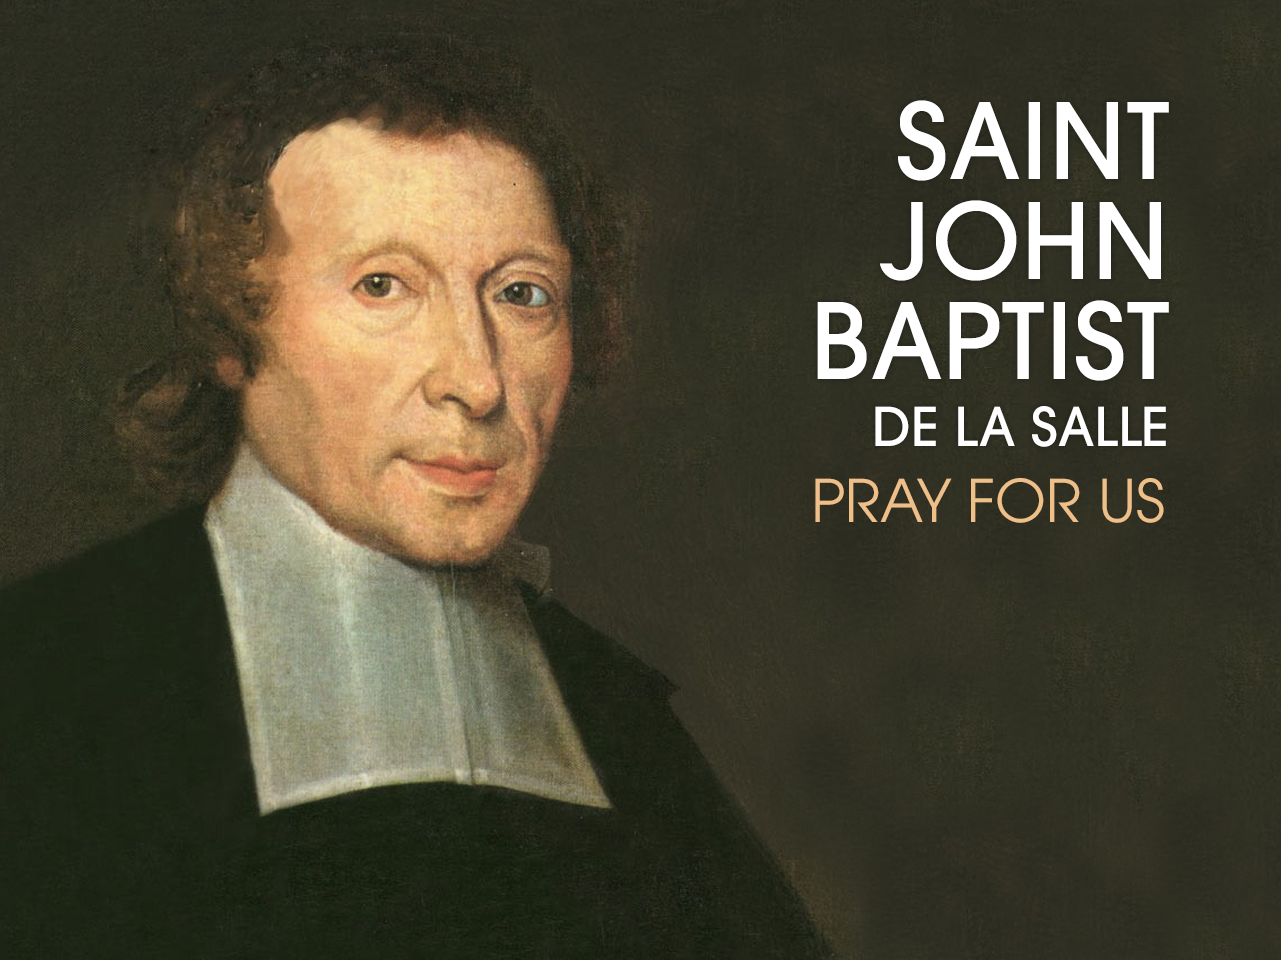 St. John Baptist de la Salle